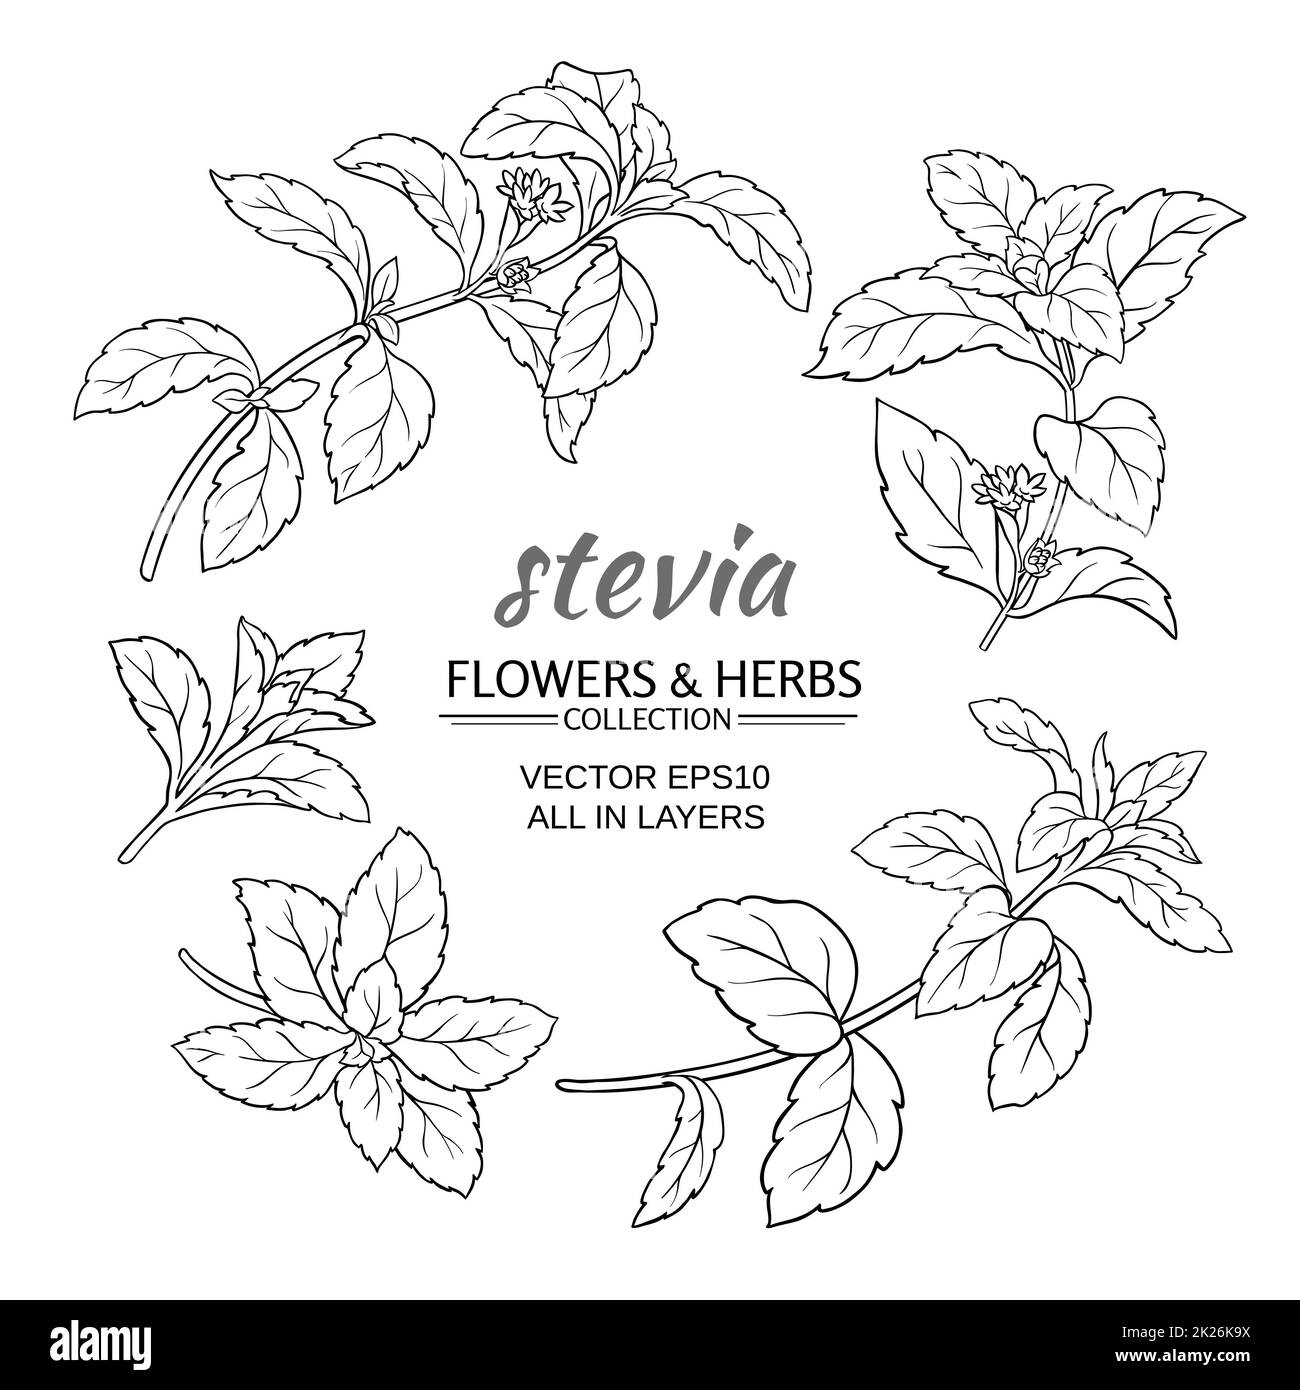 stevia vector set Stock Photo